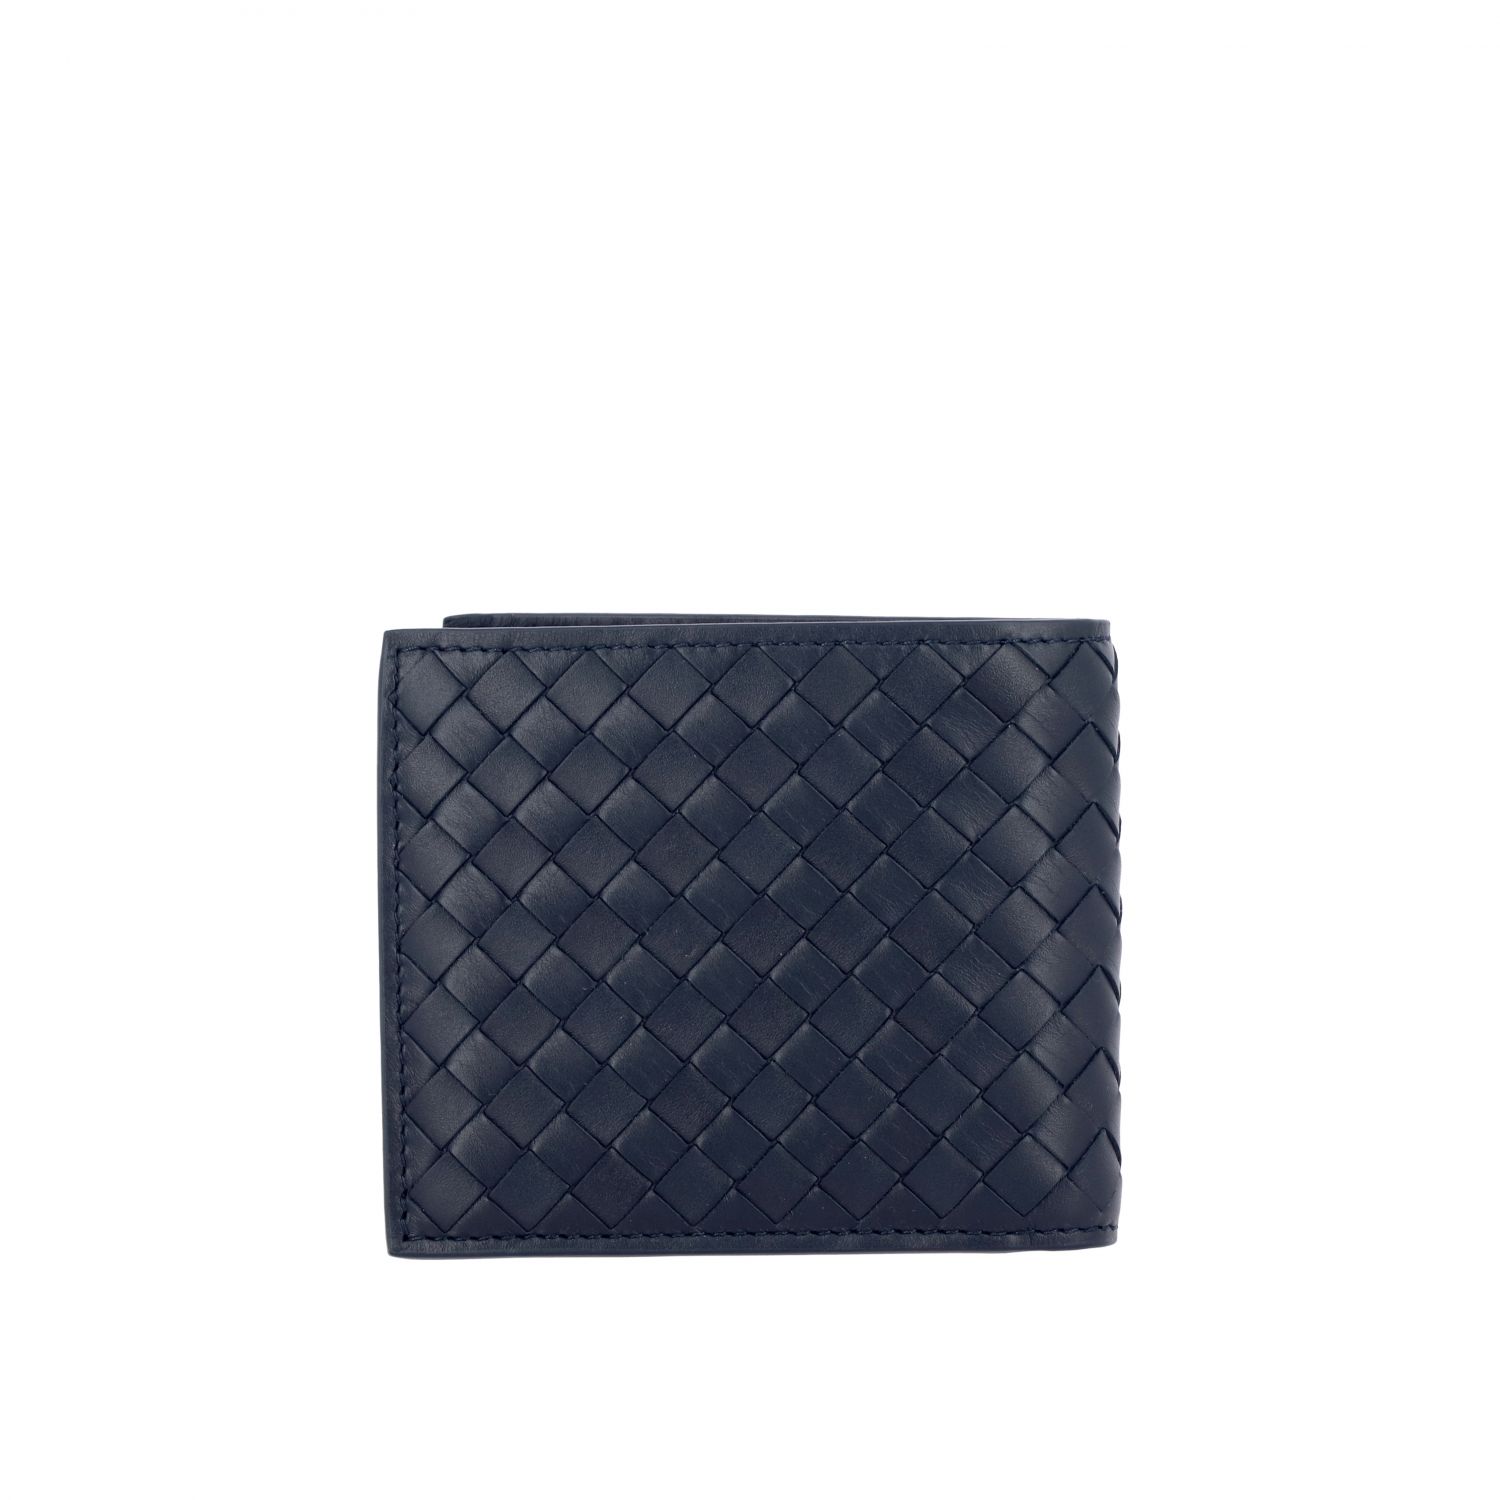 Bottega Veneta Outlet: wallet in woven leather | Wallet Bottega Veneta ...